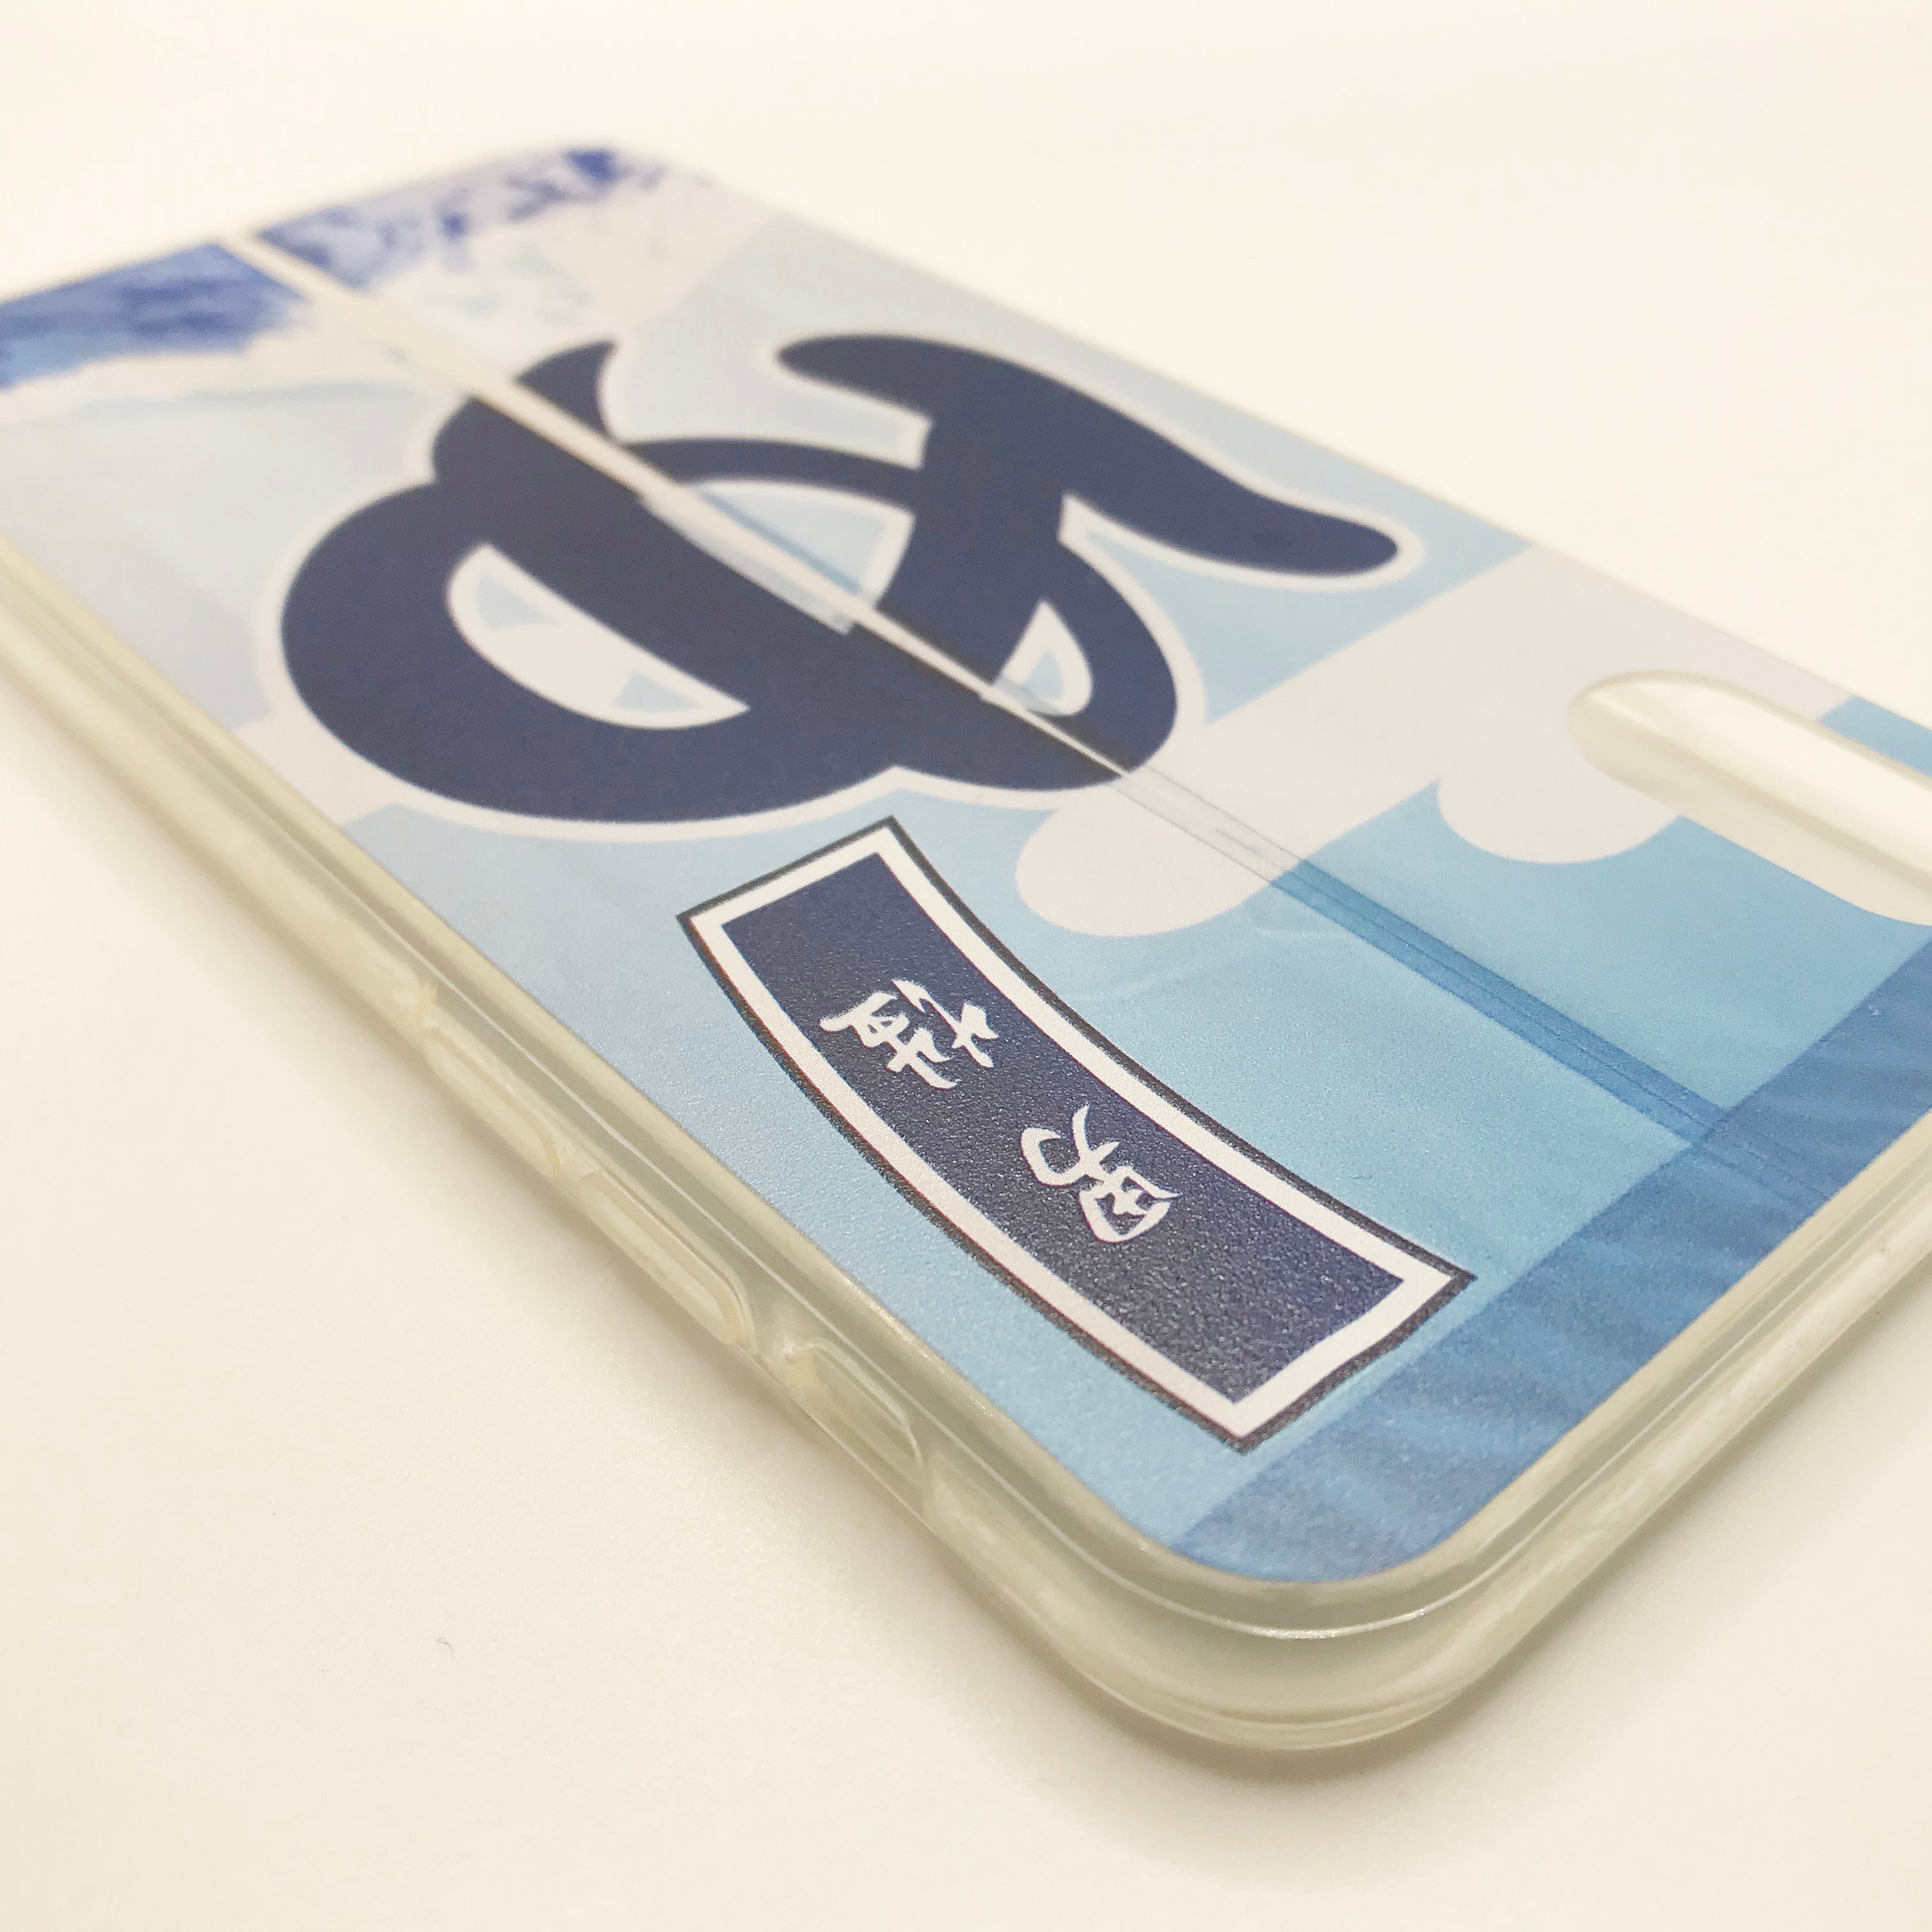 【80%OFF】Bunkyo Bath Association Mobile Case Blue (may mobile fan)